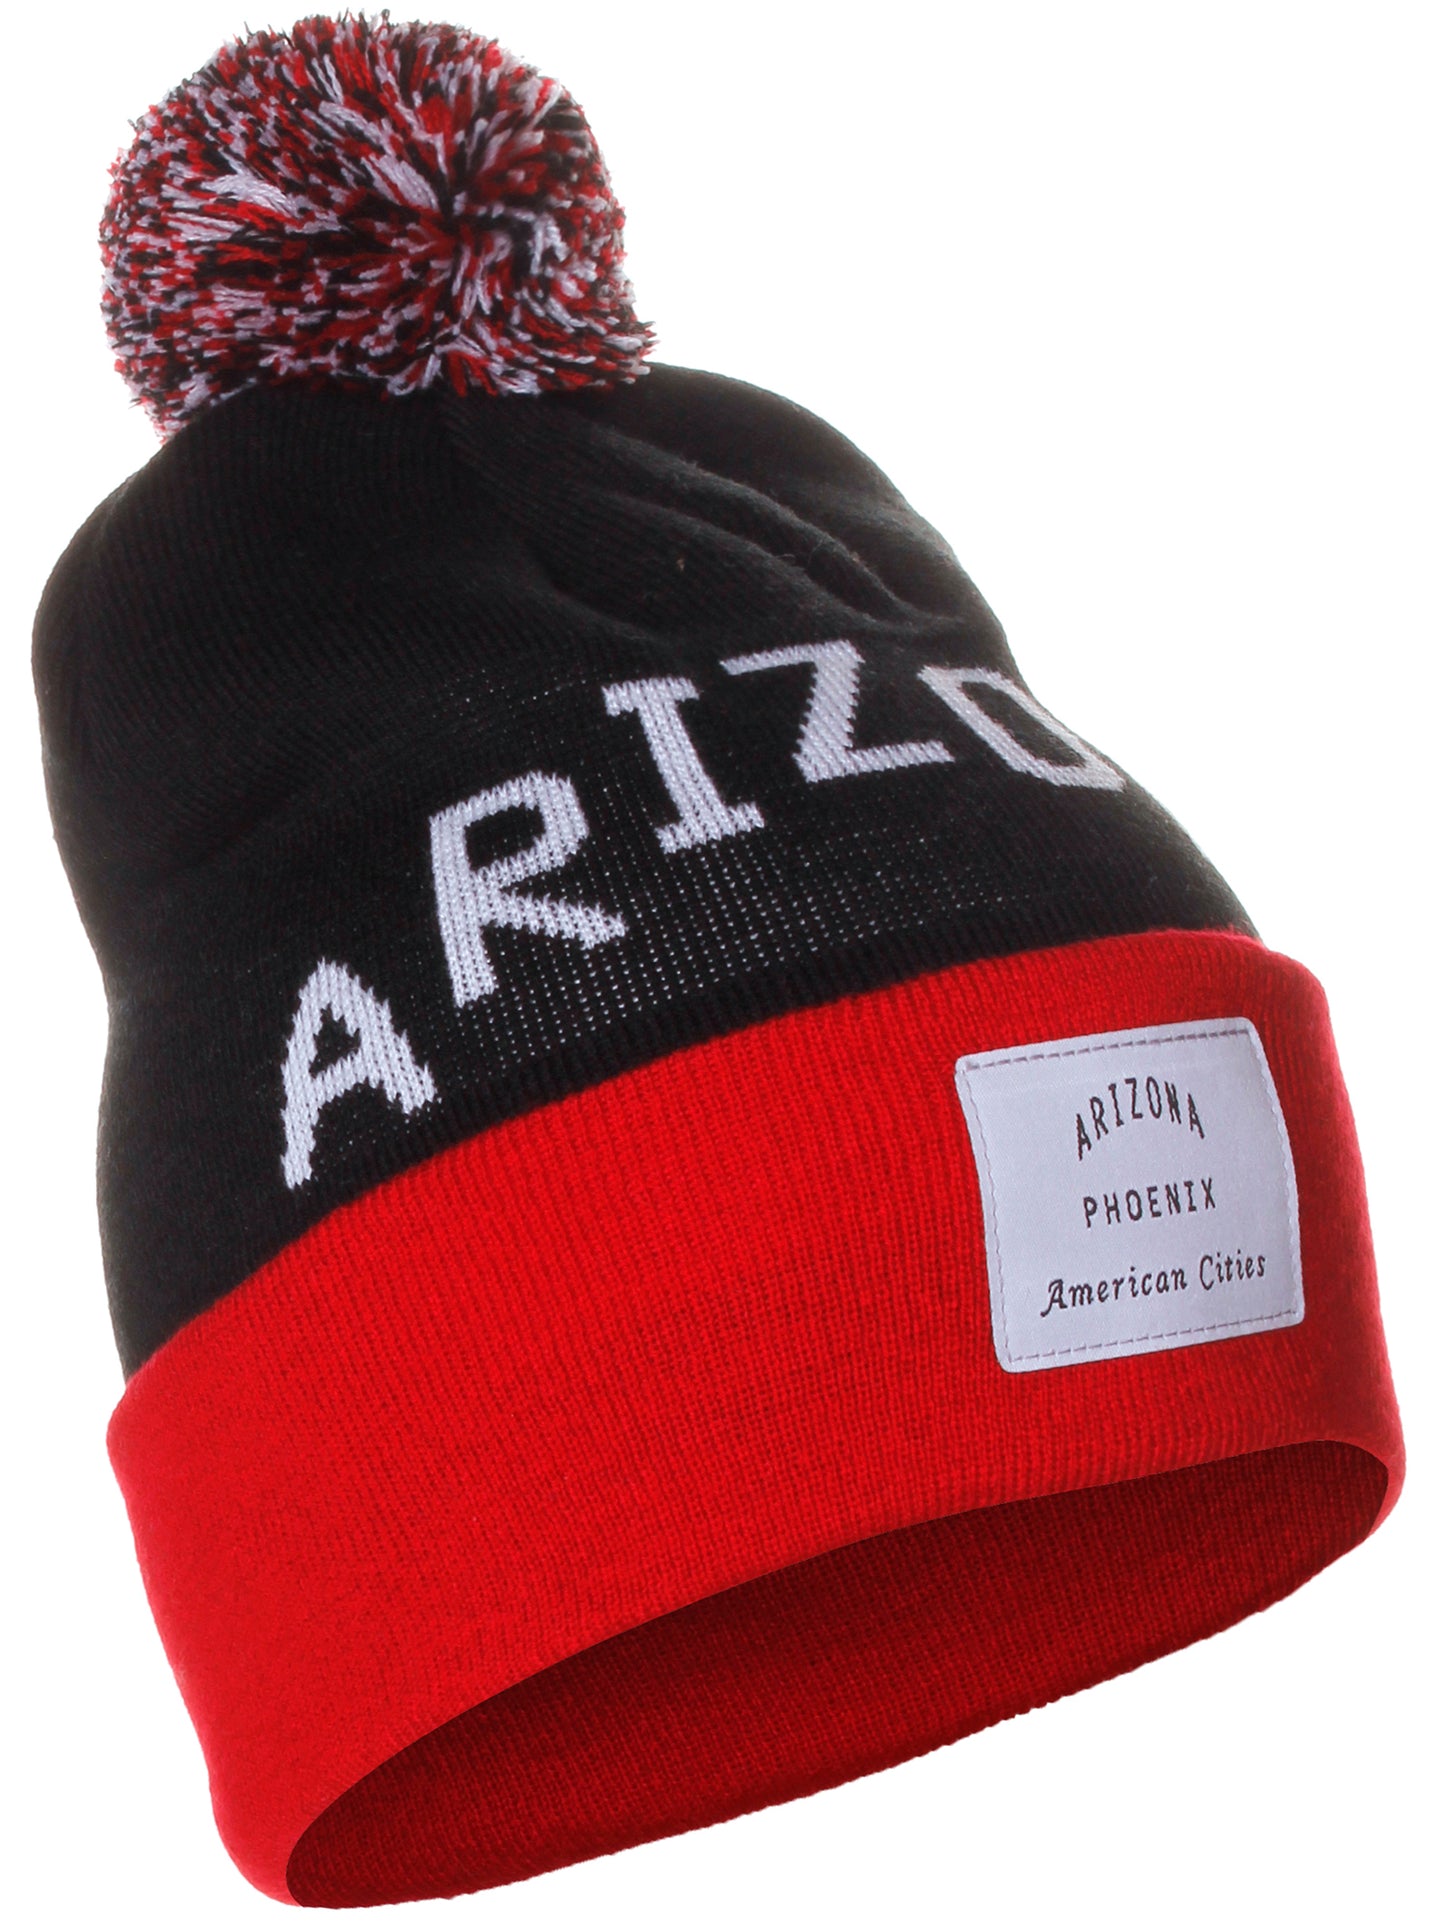 American Cities Arizona Phoenix Arch Letters Pom Pom Knit Hat Cap Beanie